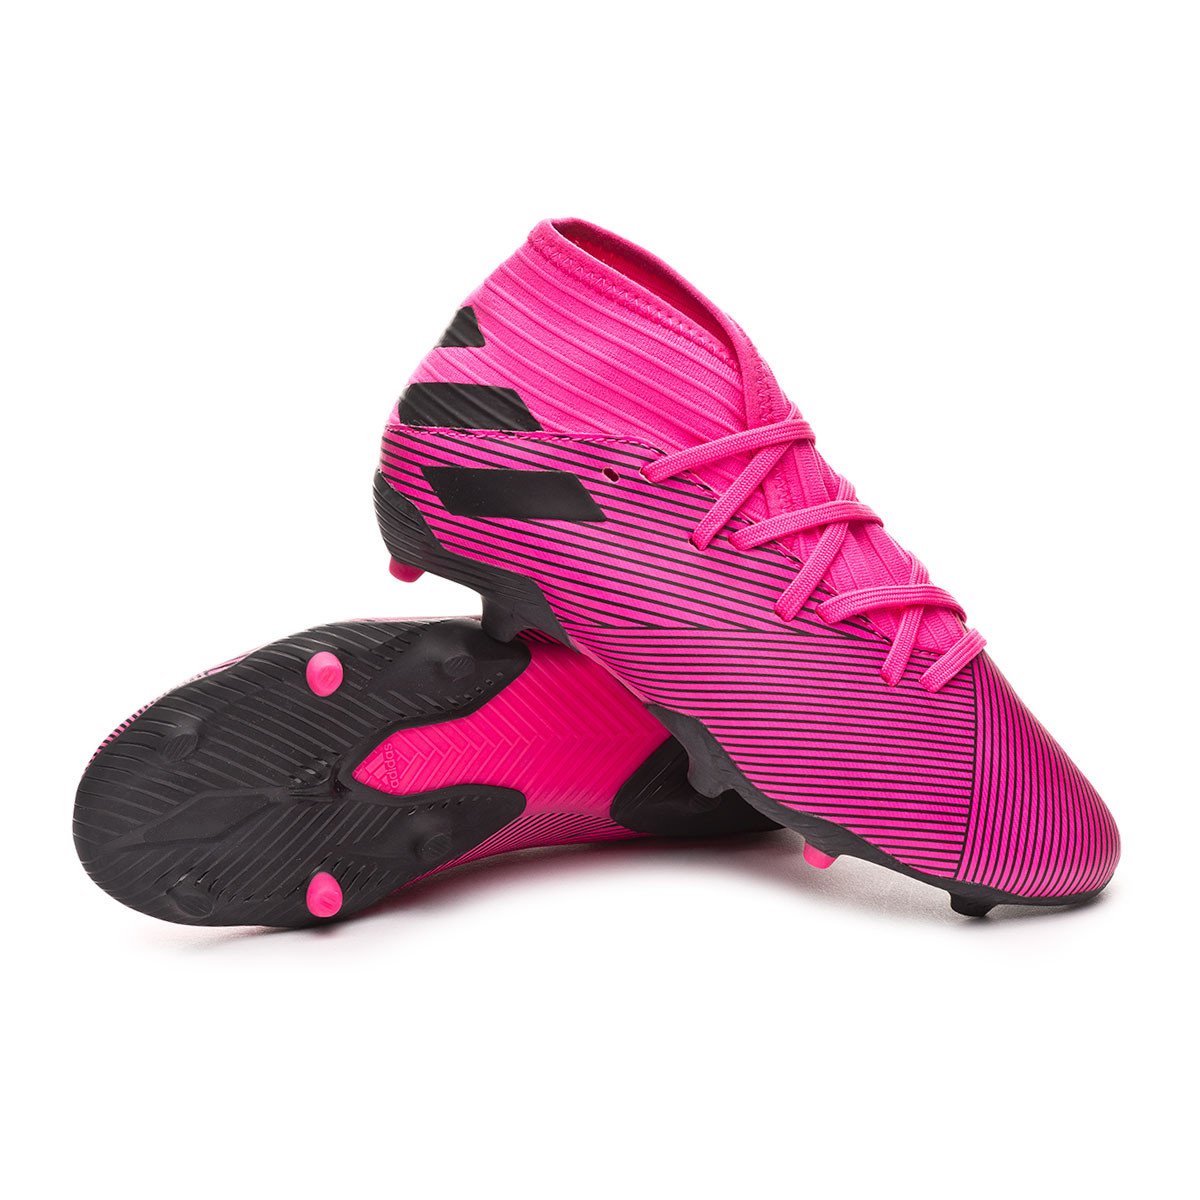 Bota de fútbol adidas Nemeziz 19.3 FG Niño Shock pink-Core black-Shock pink  - Tienda de fútbol Fútbol Emotion